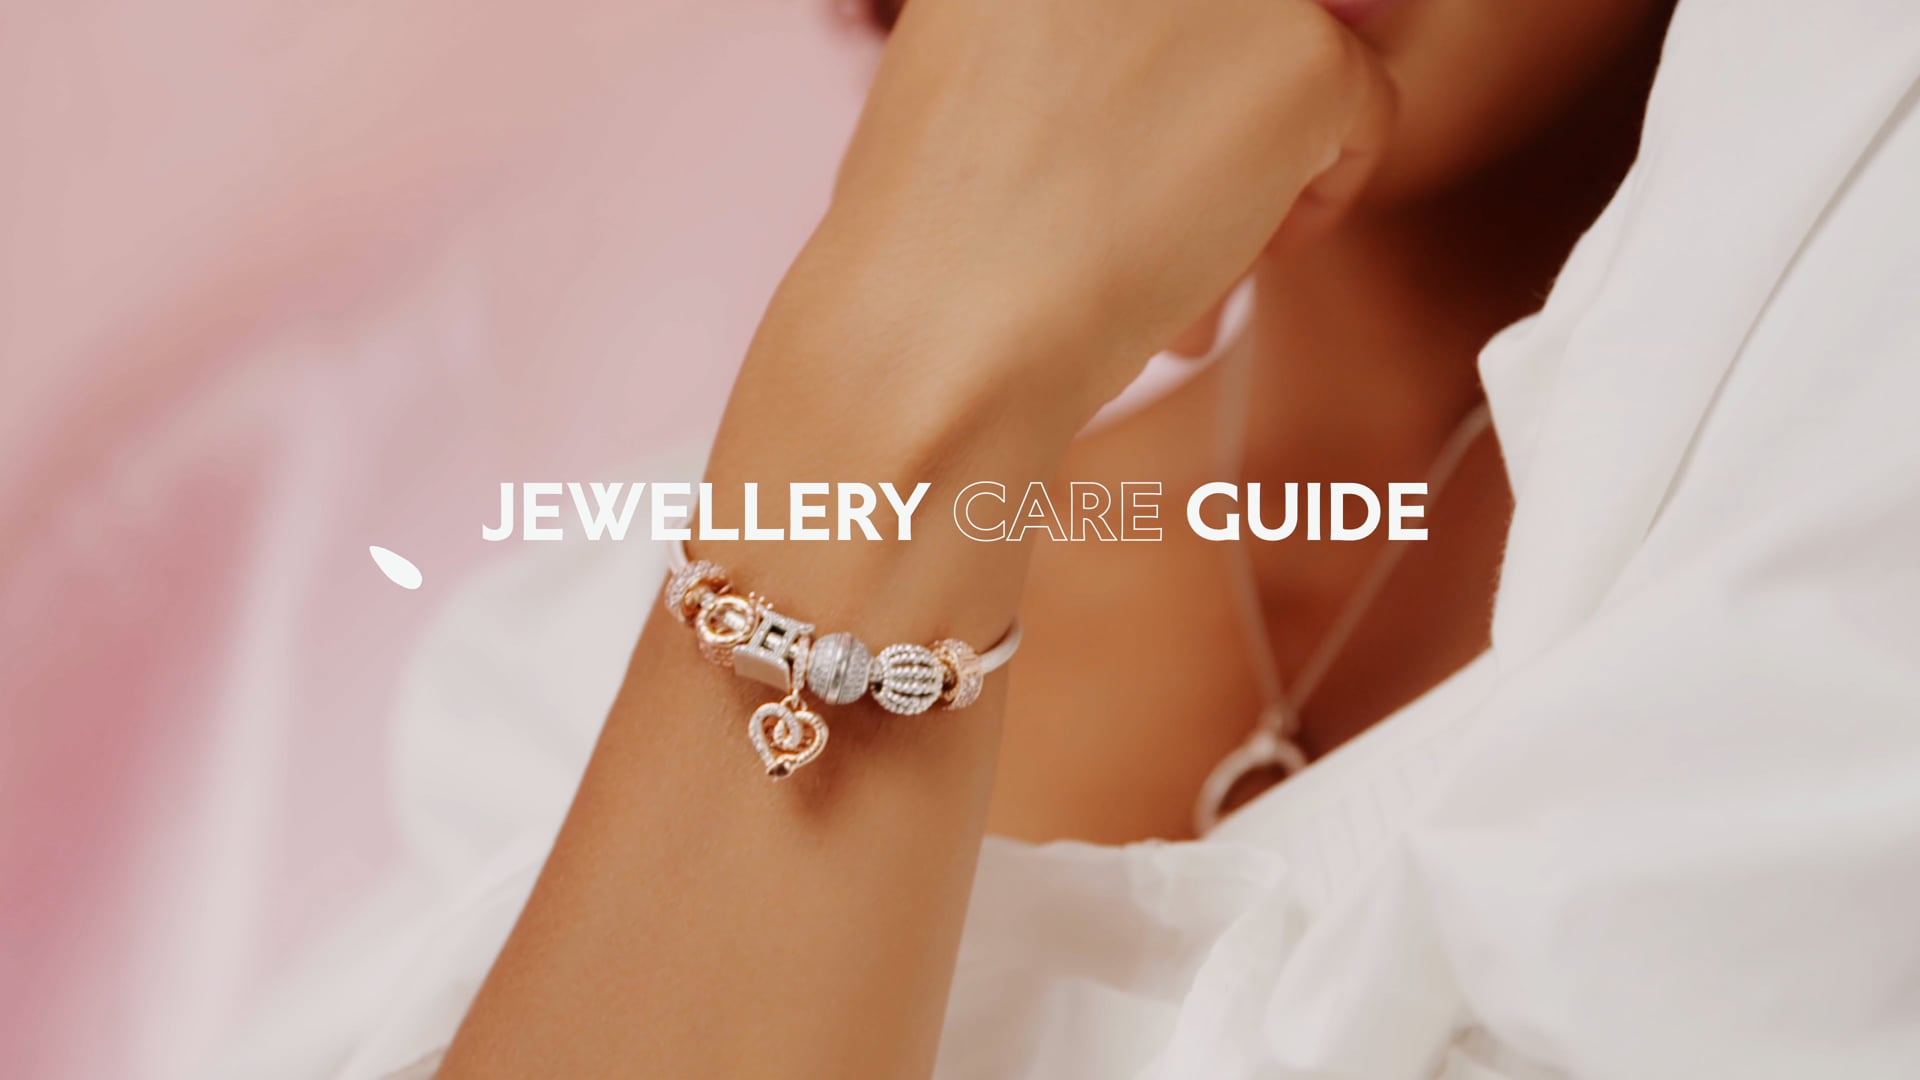 PANDORA - Jewellery Care Guide 16x9 4K